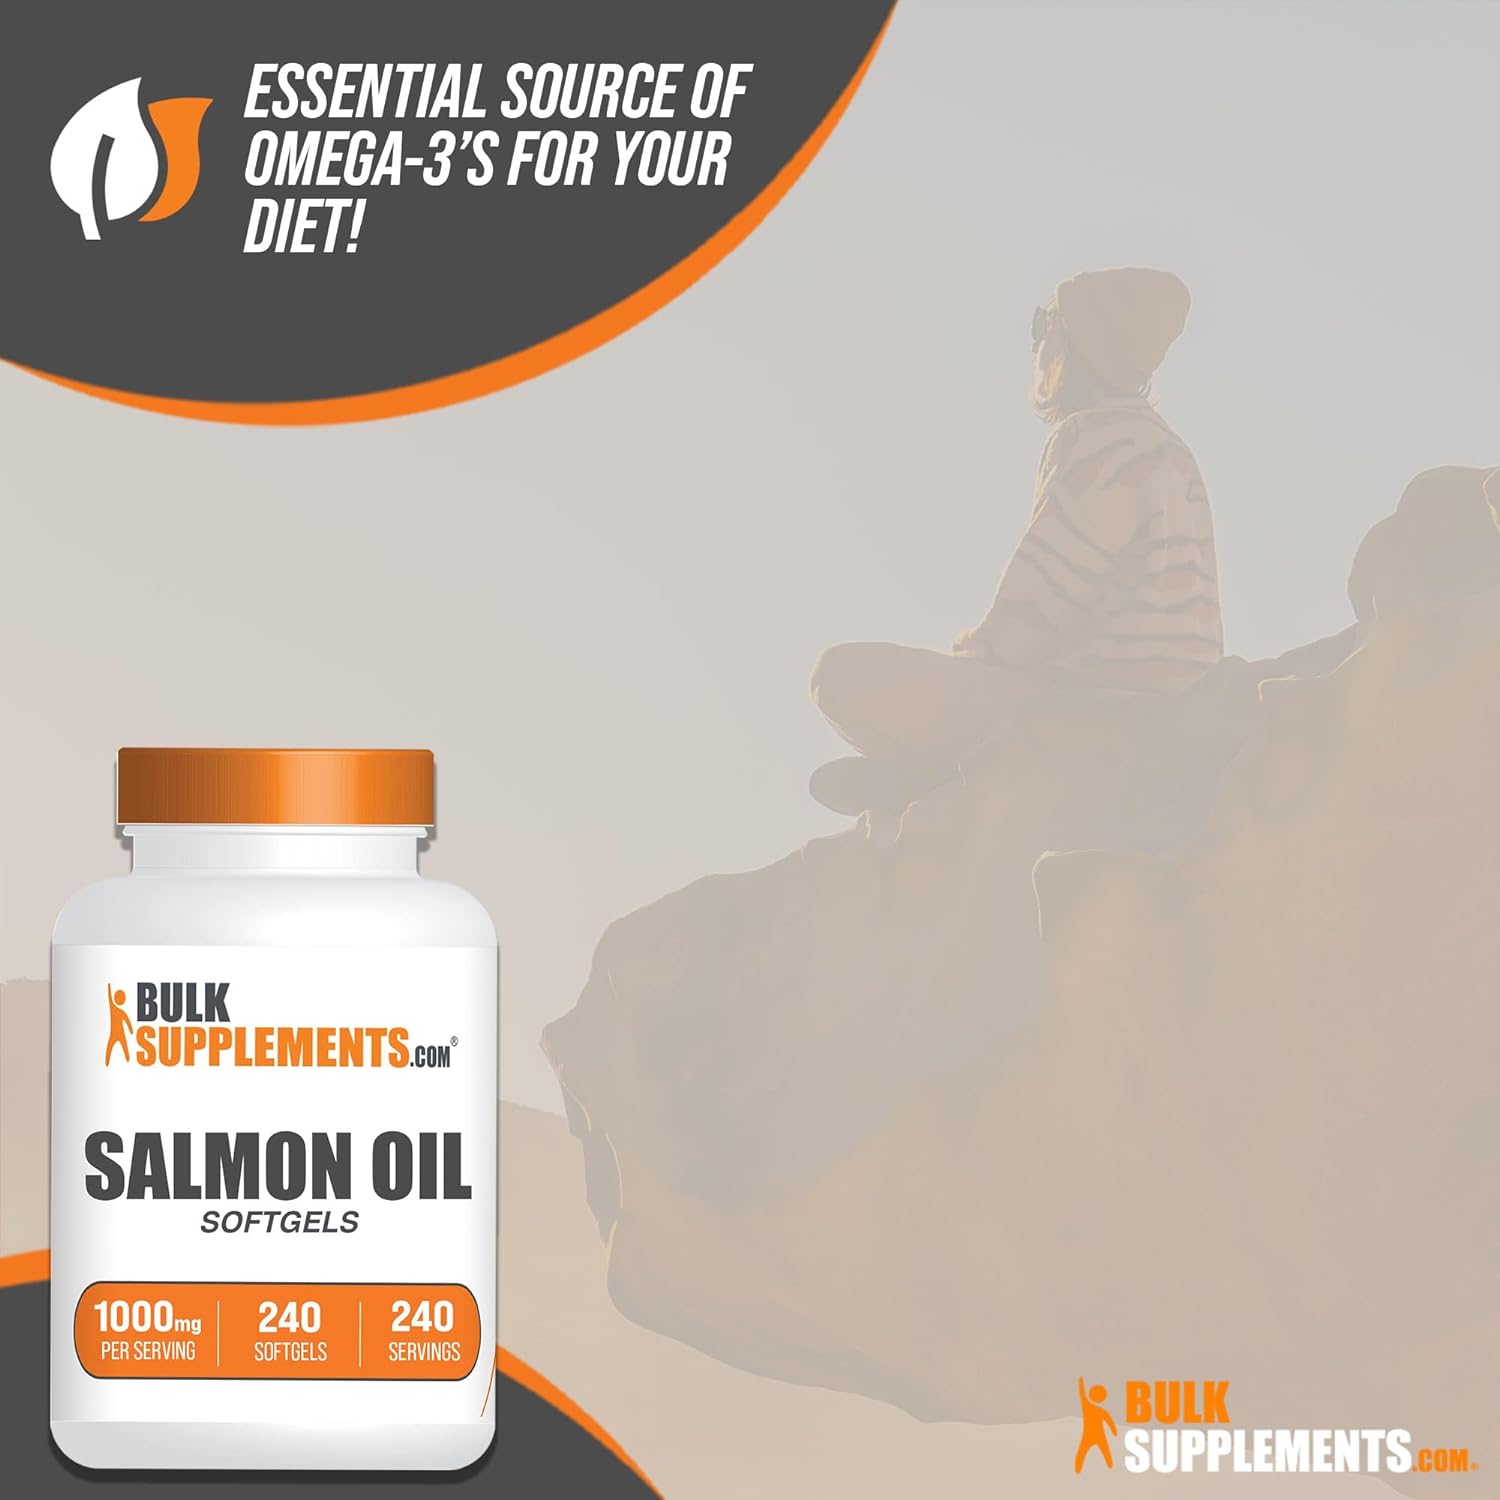 BULKSUPPLEMENTS.COM Salmon Oil Softgels - Wild Alaskan Salmon Oil, Sal